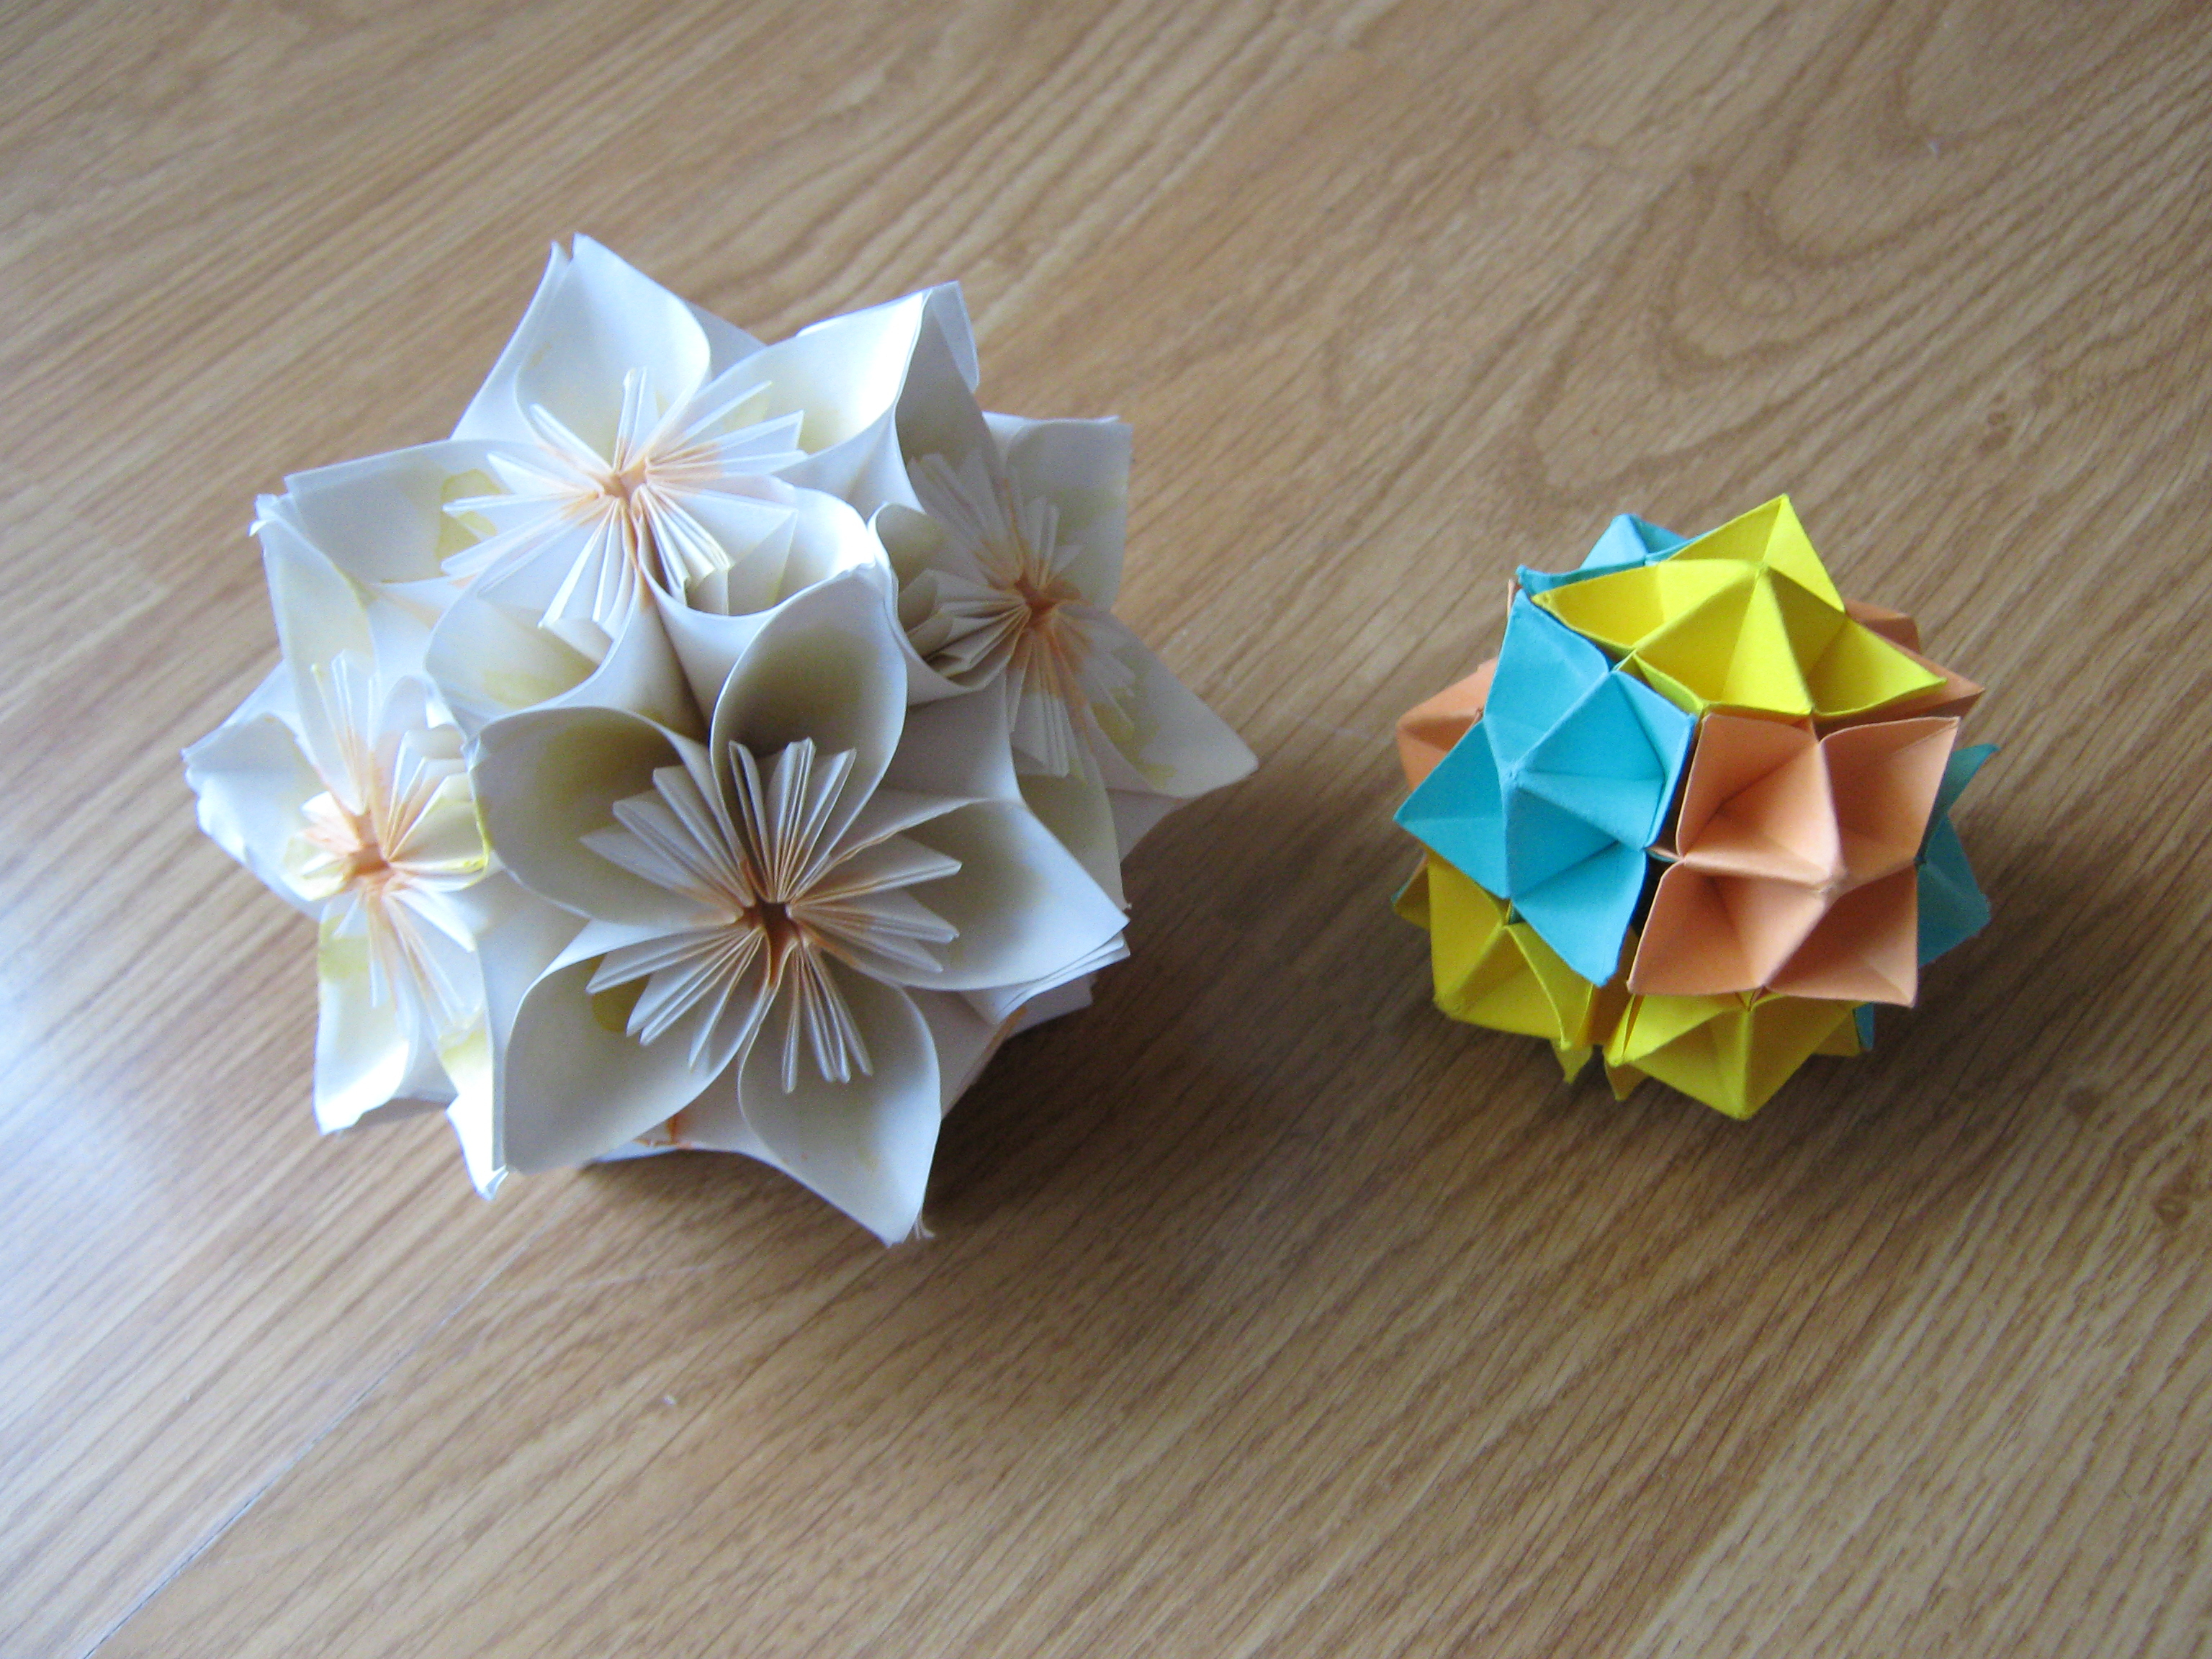 Origami Modular Ball 87 Origami Flower Modular Ball Origami Paper Ball Flower Kusudama